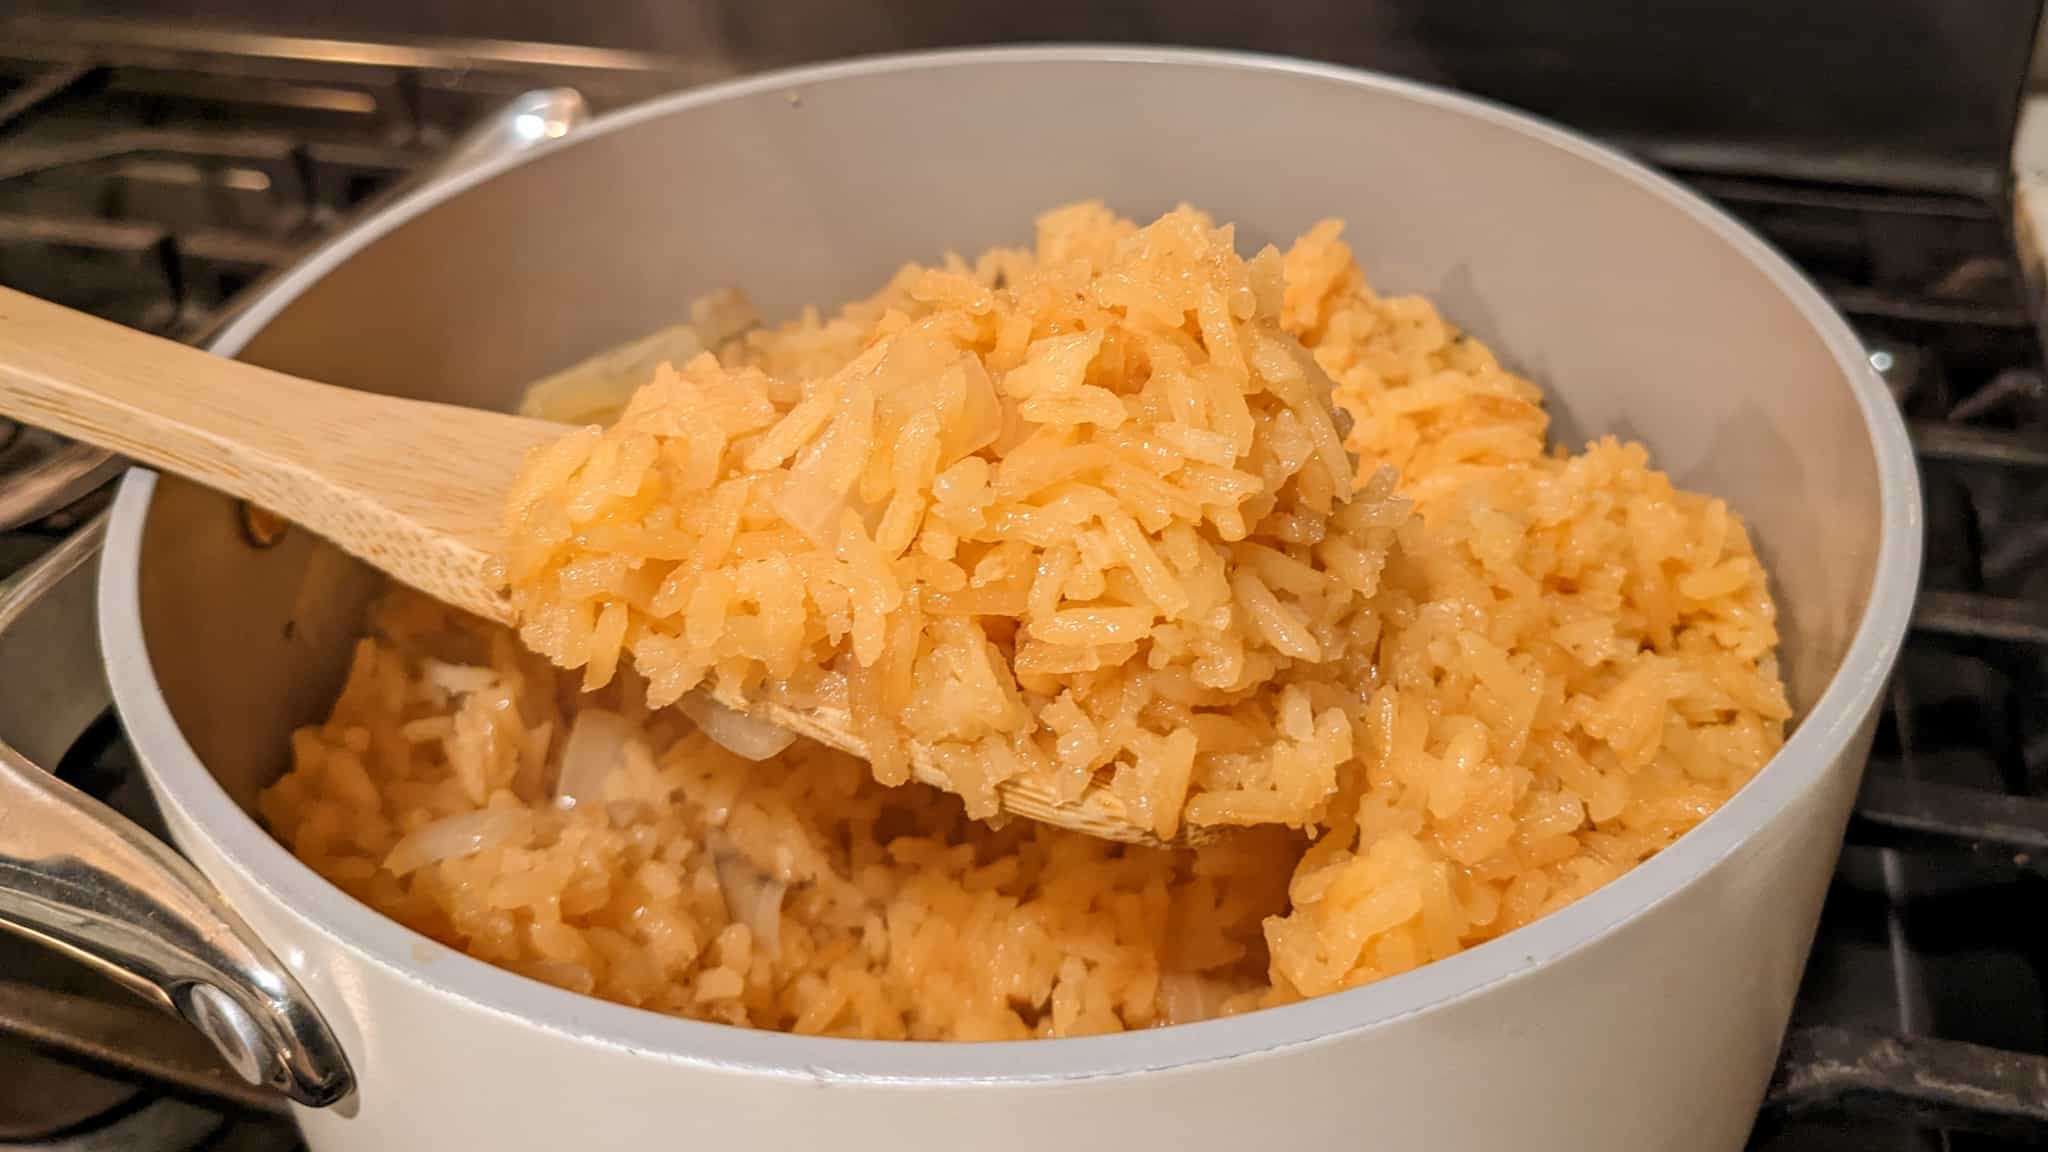 pot with orange tinted rice